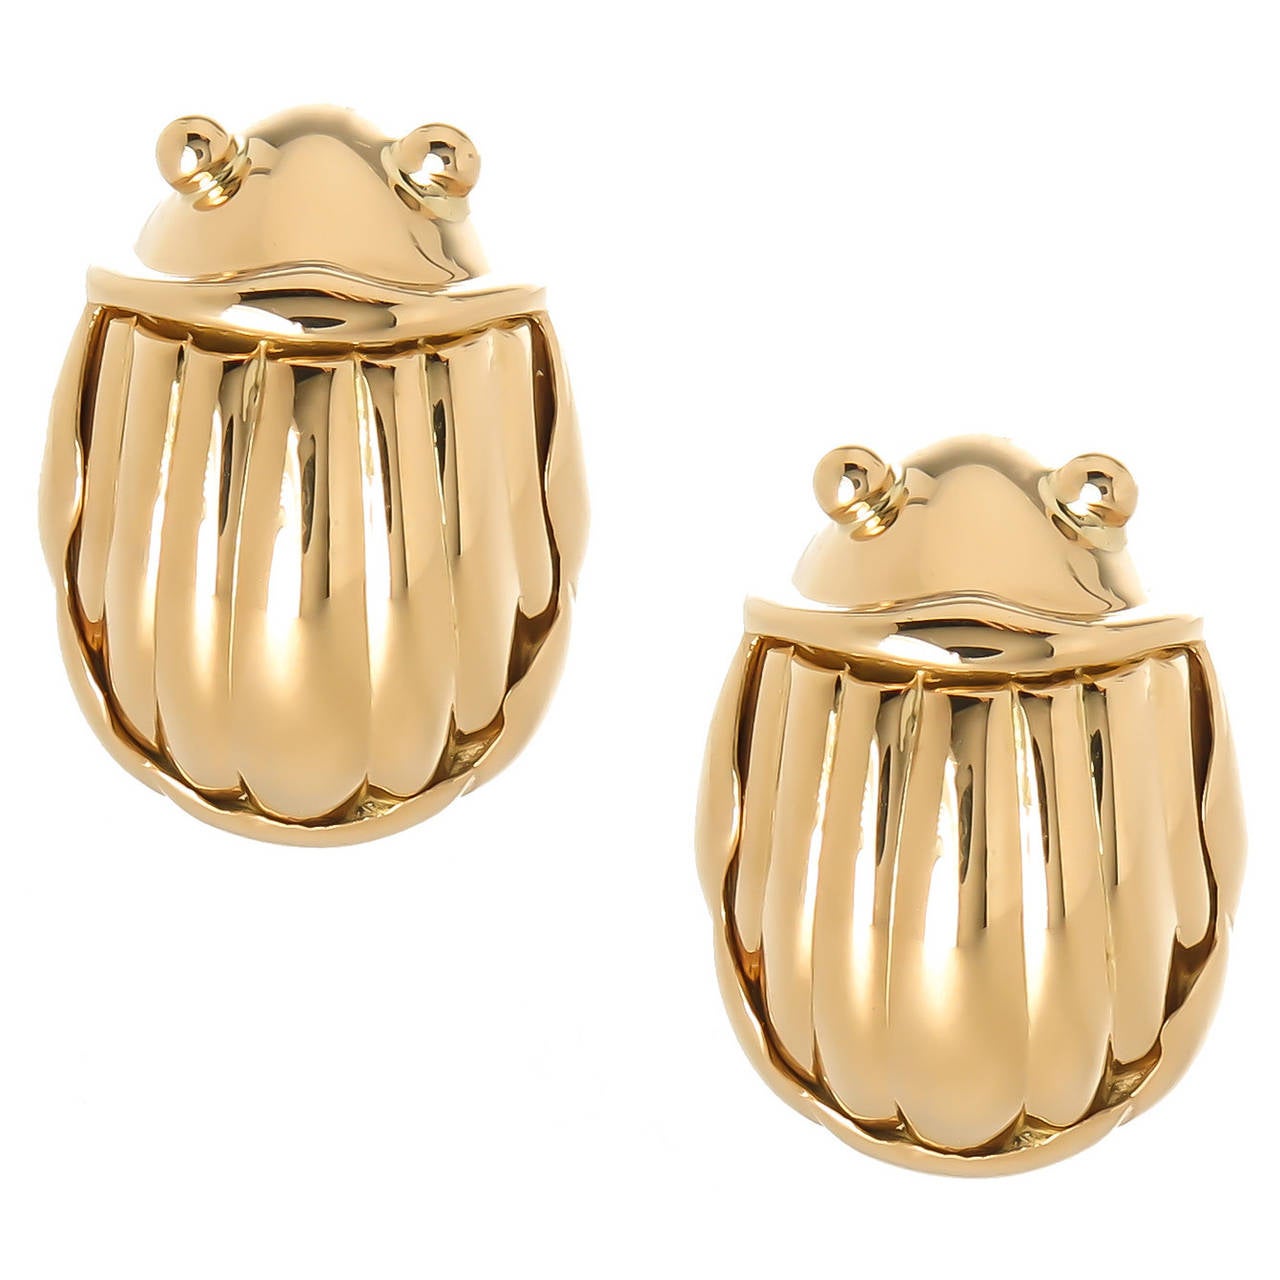 Tiffany & Co. Gold Lady Bug Earrings